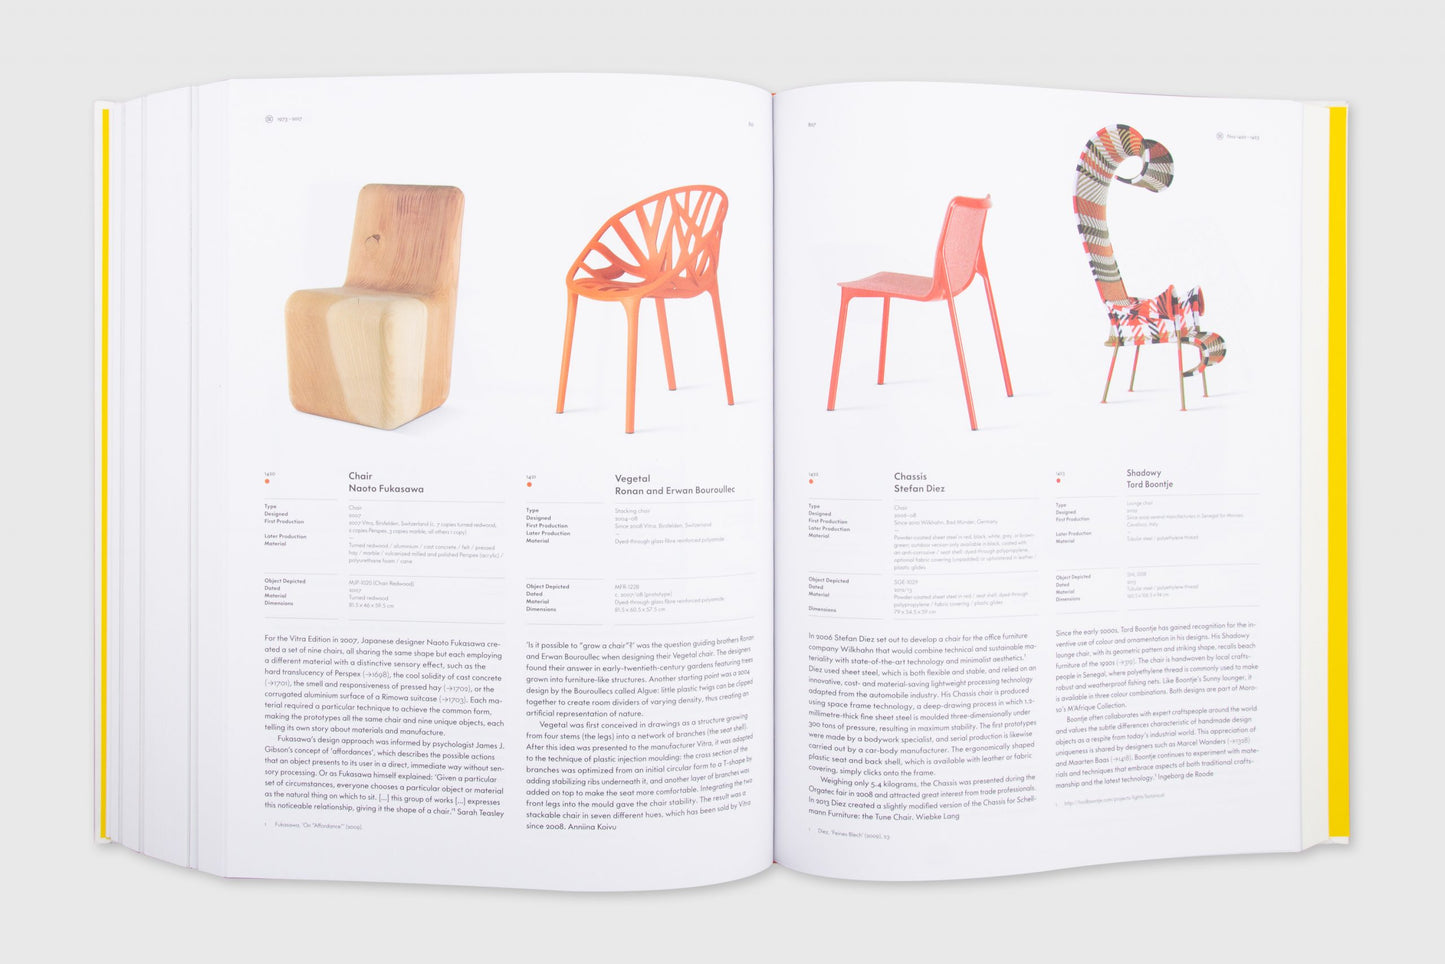 The Atlas of Furniture Design